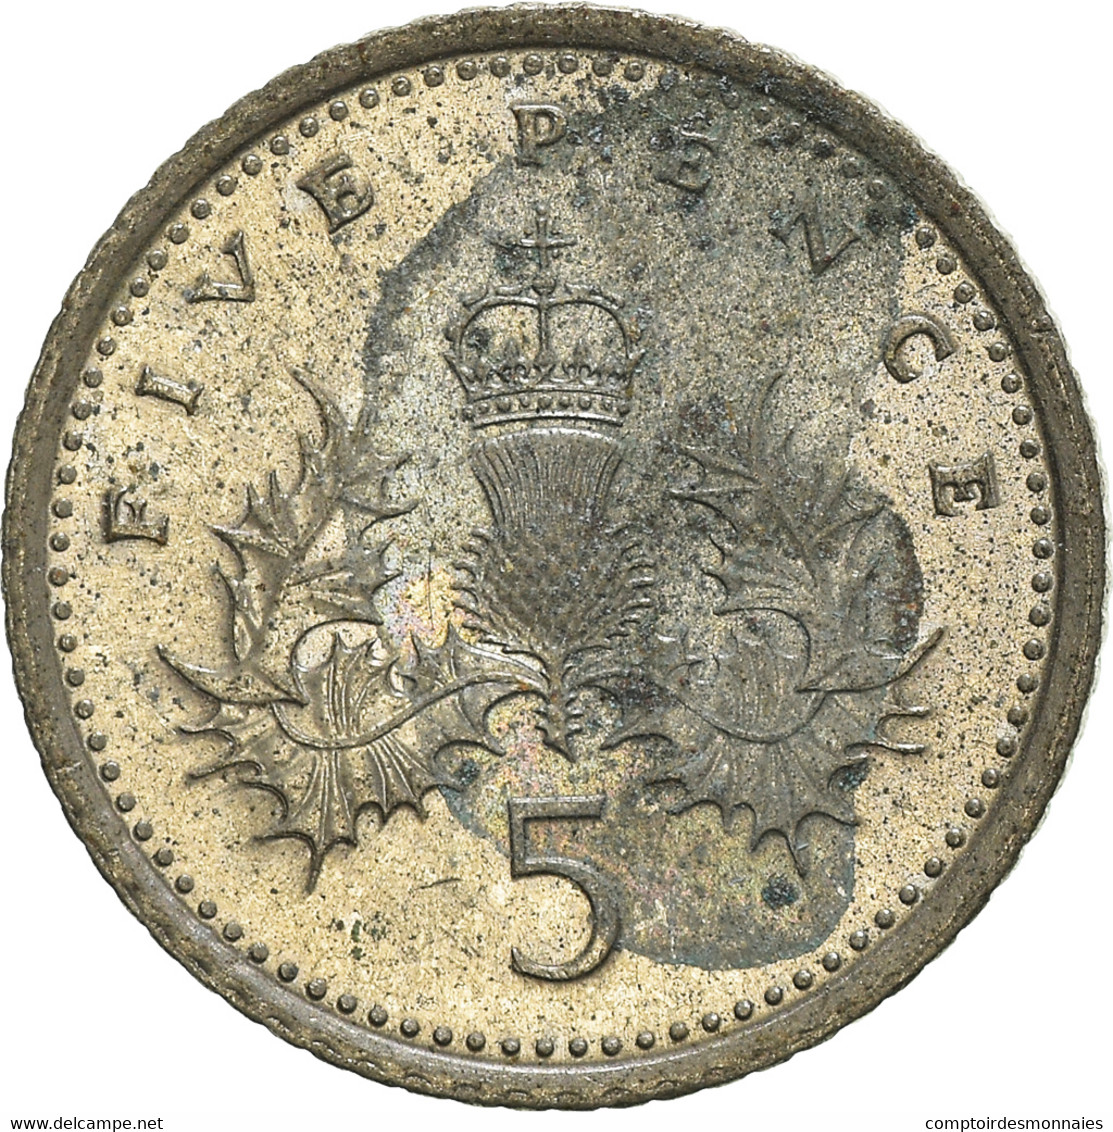 Monnaie, Grande-Bretagne, 5 Pence, 1992 - 5 Pence & 5 New Pence